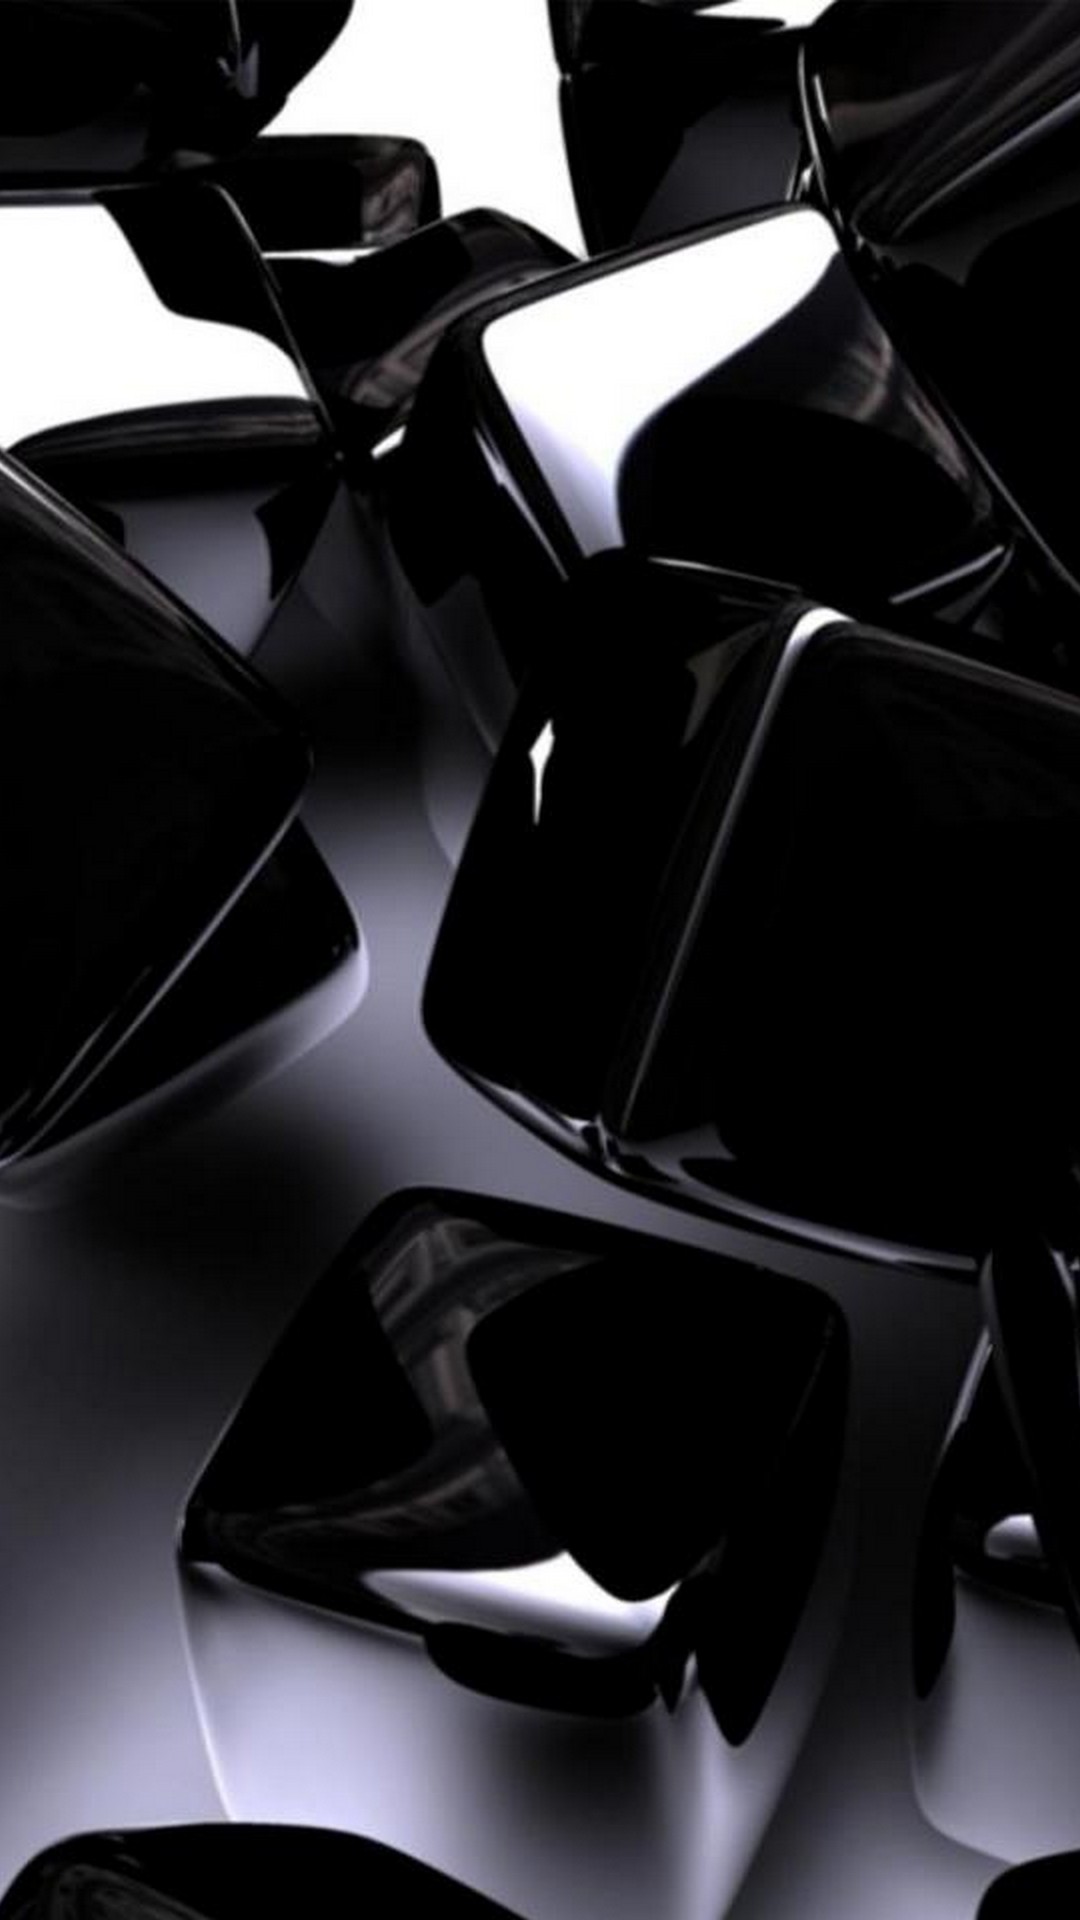 3D Black Box iPhone Wallpaper resolution 1080x1920